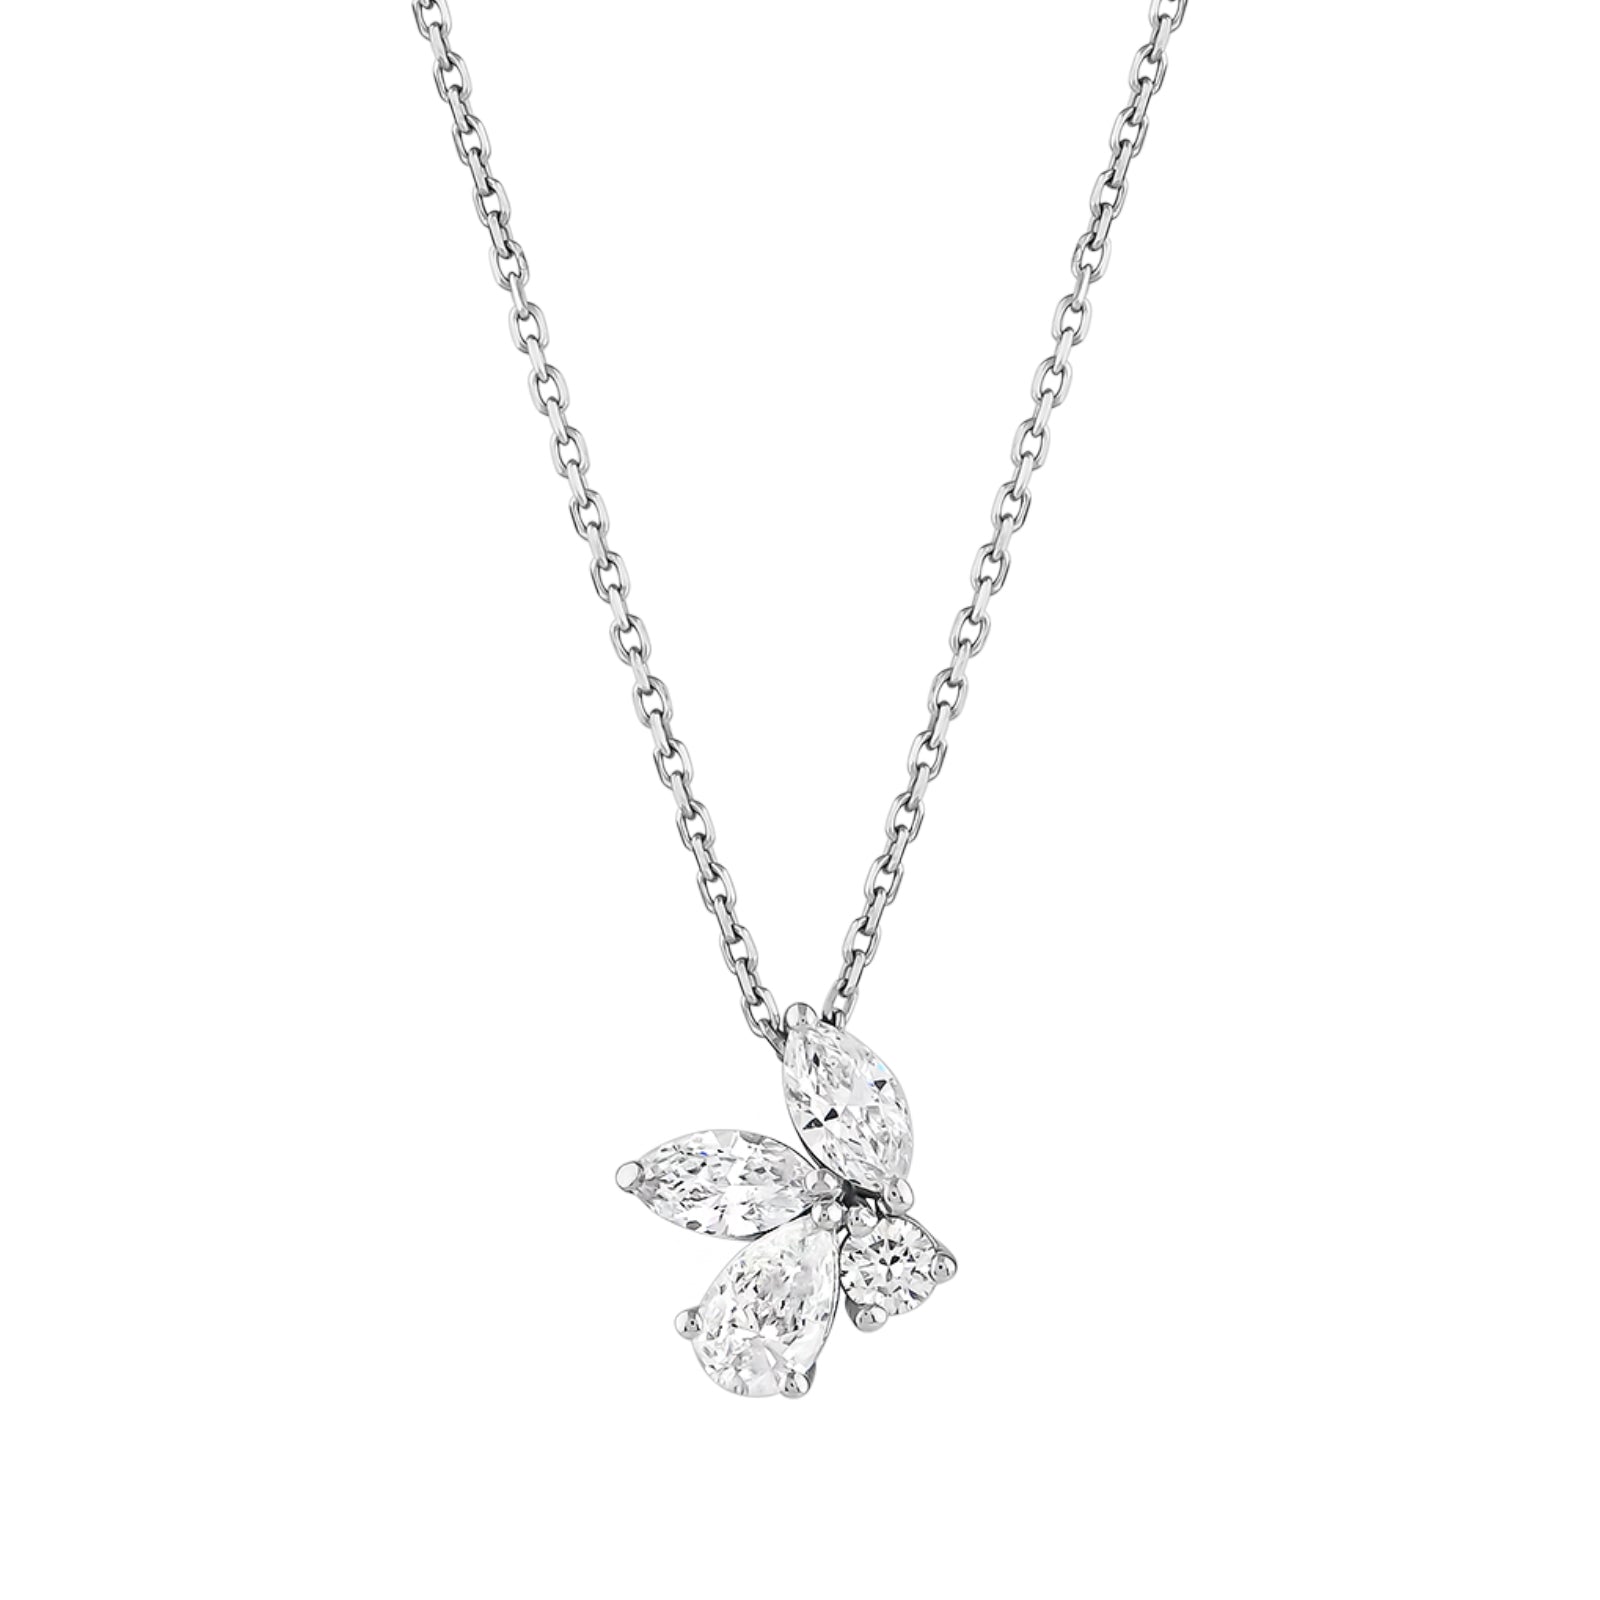 The Aurora by Lumeniri Diamonds Fine Jewelry Collection